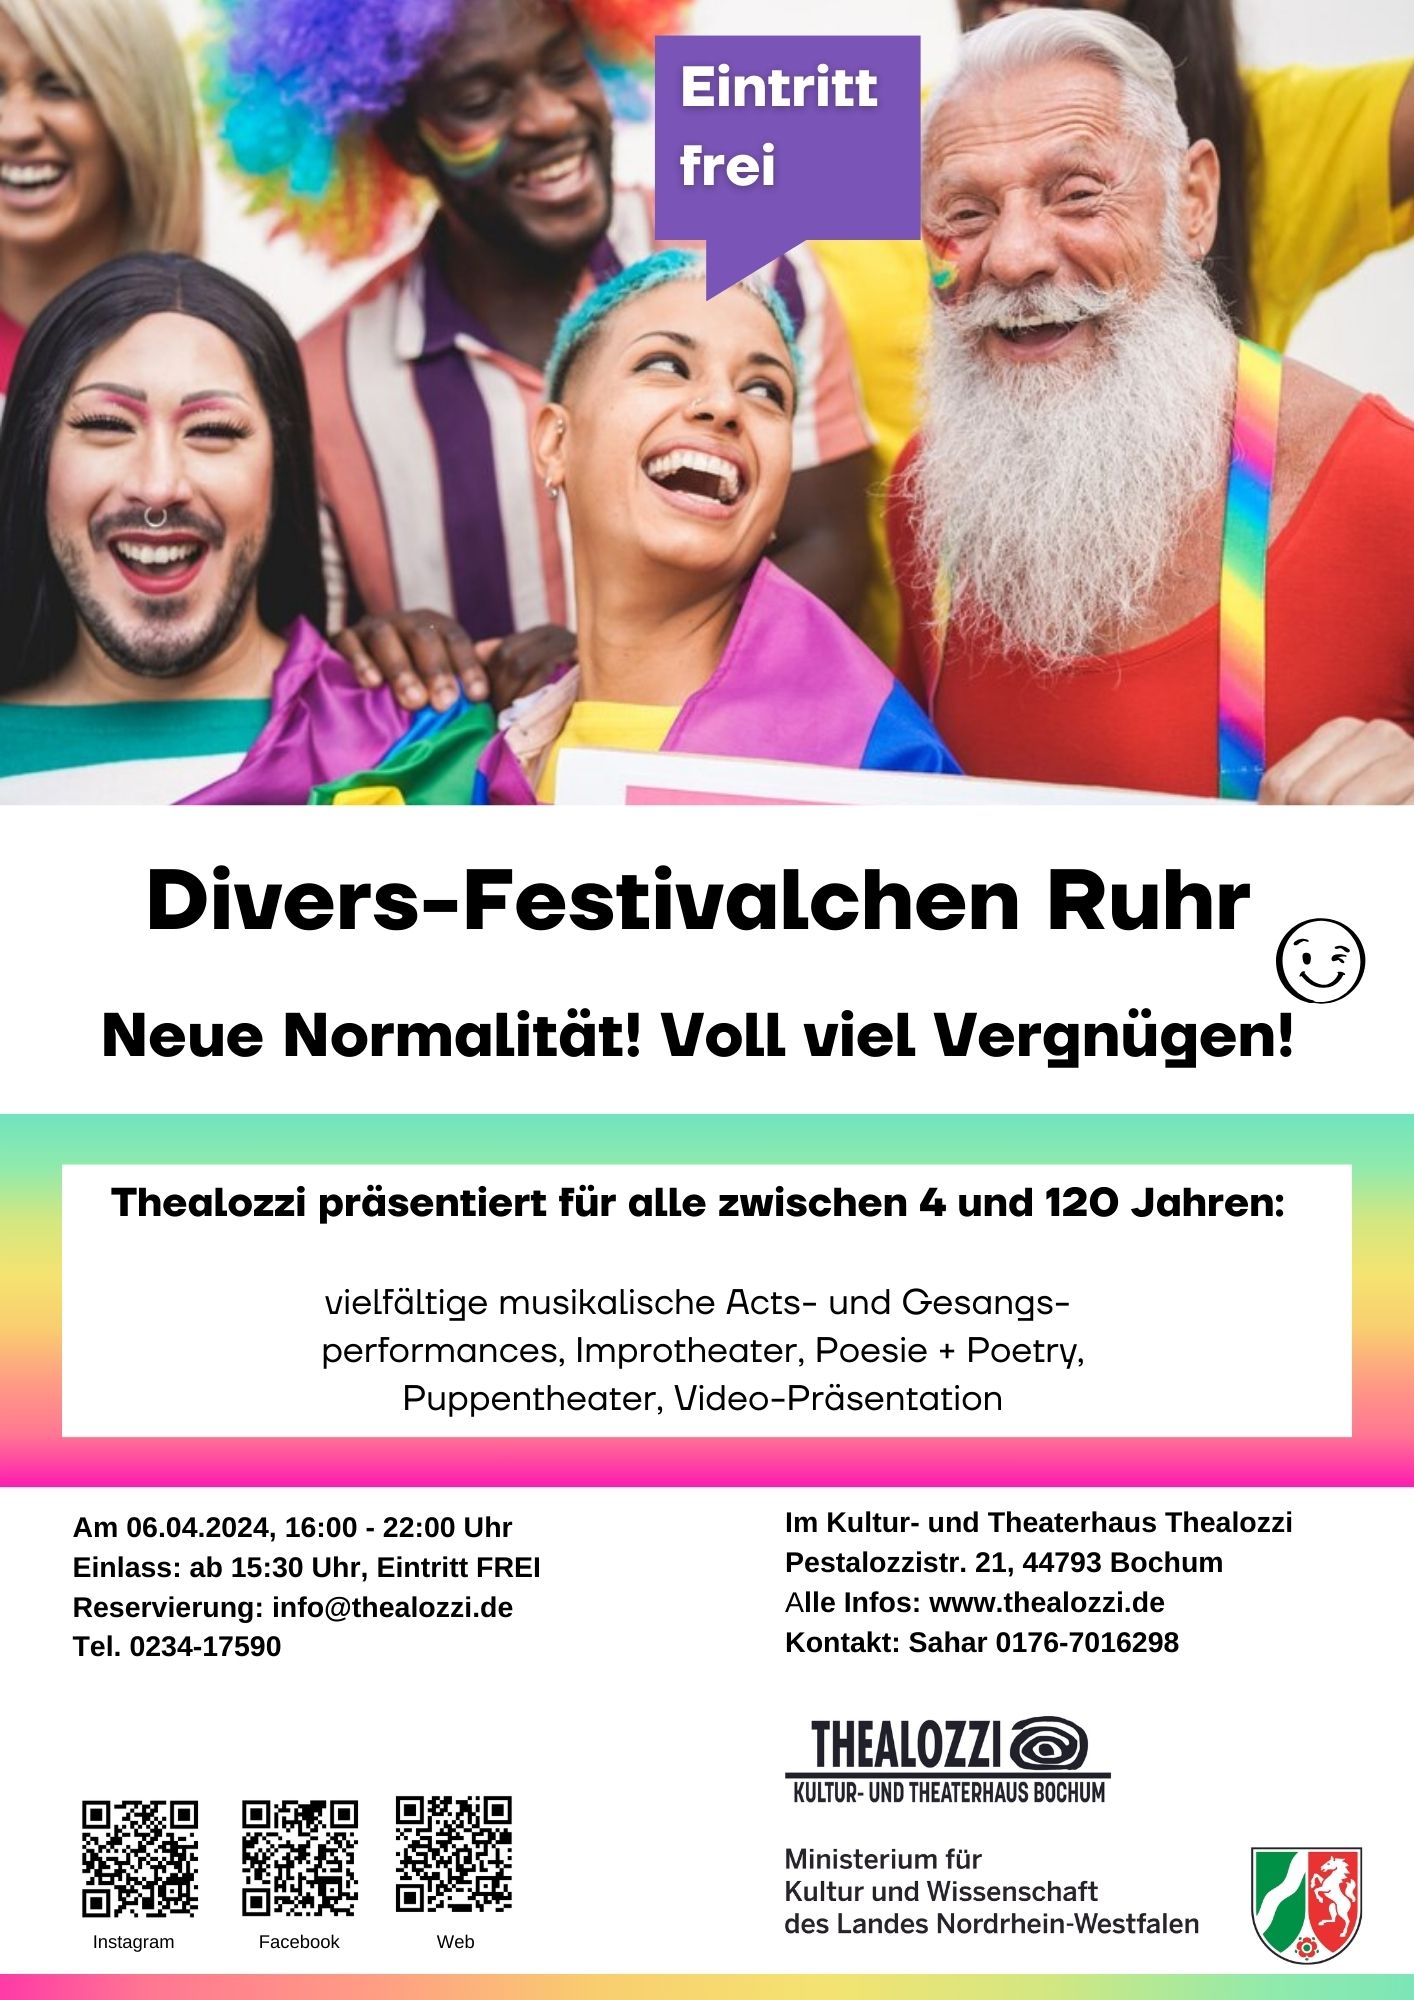 Divers-Festivalchen Ruhr